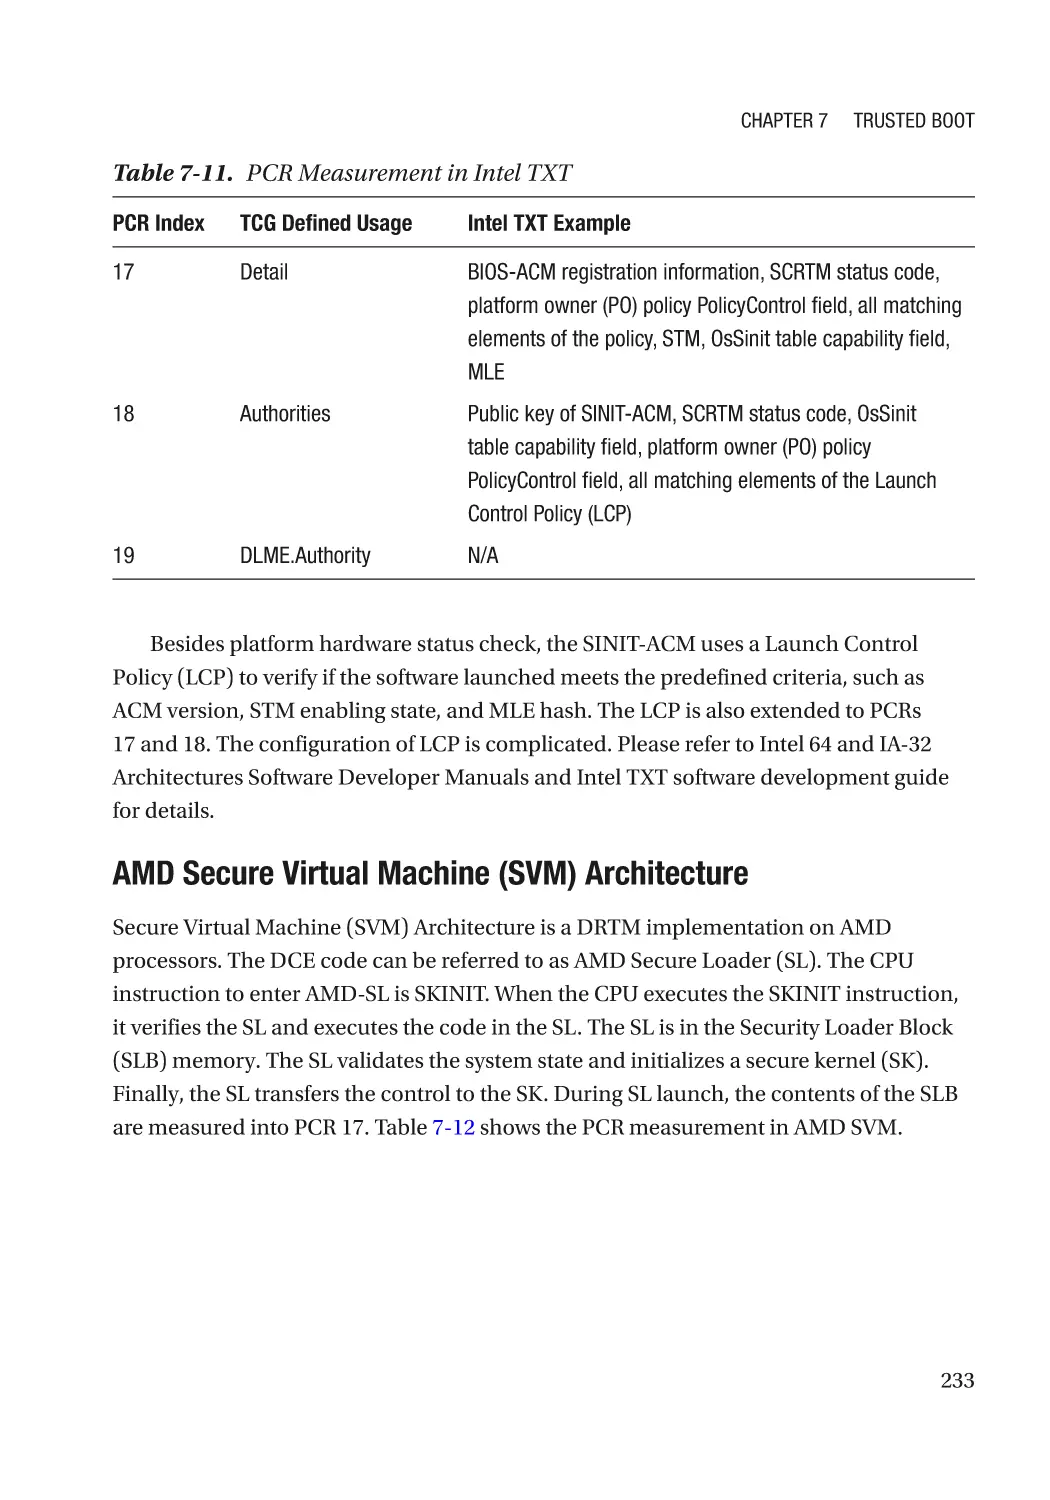 AMD Secure Virtual Machine (SVM) Architecture